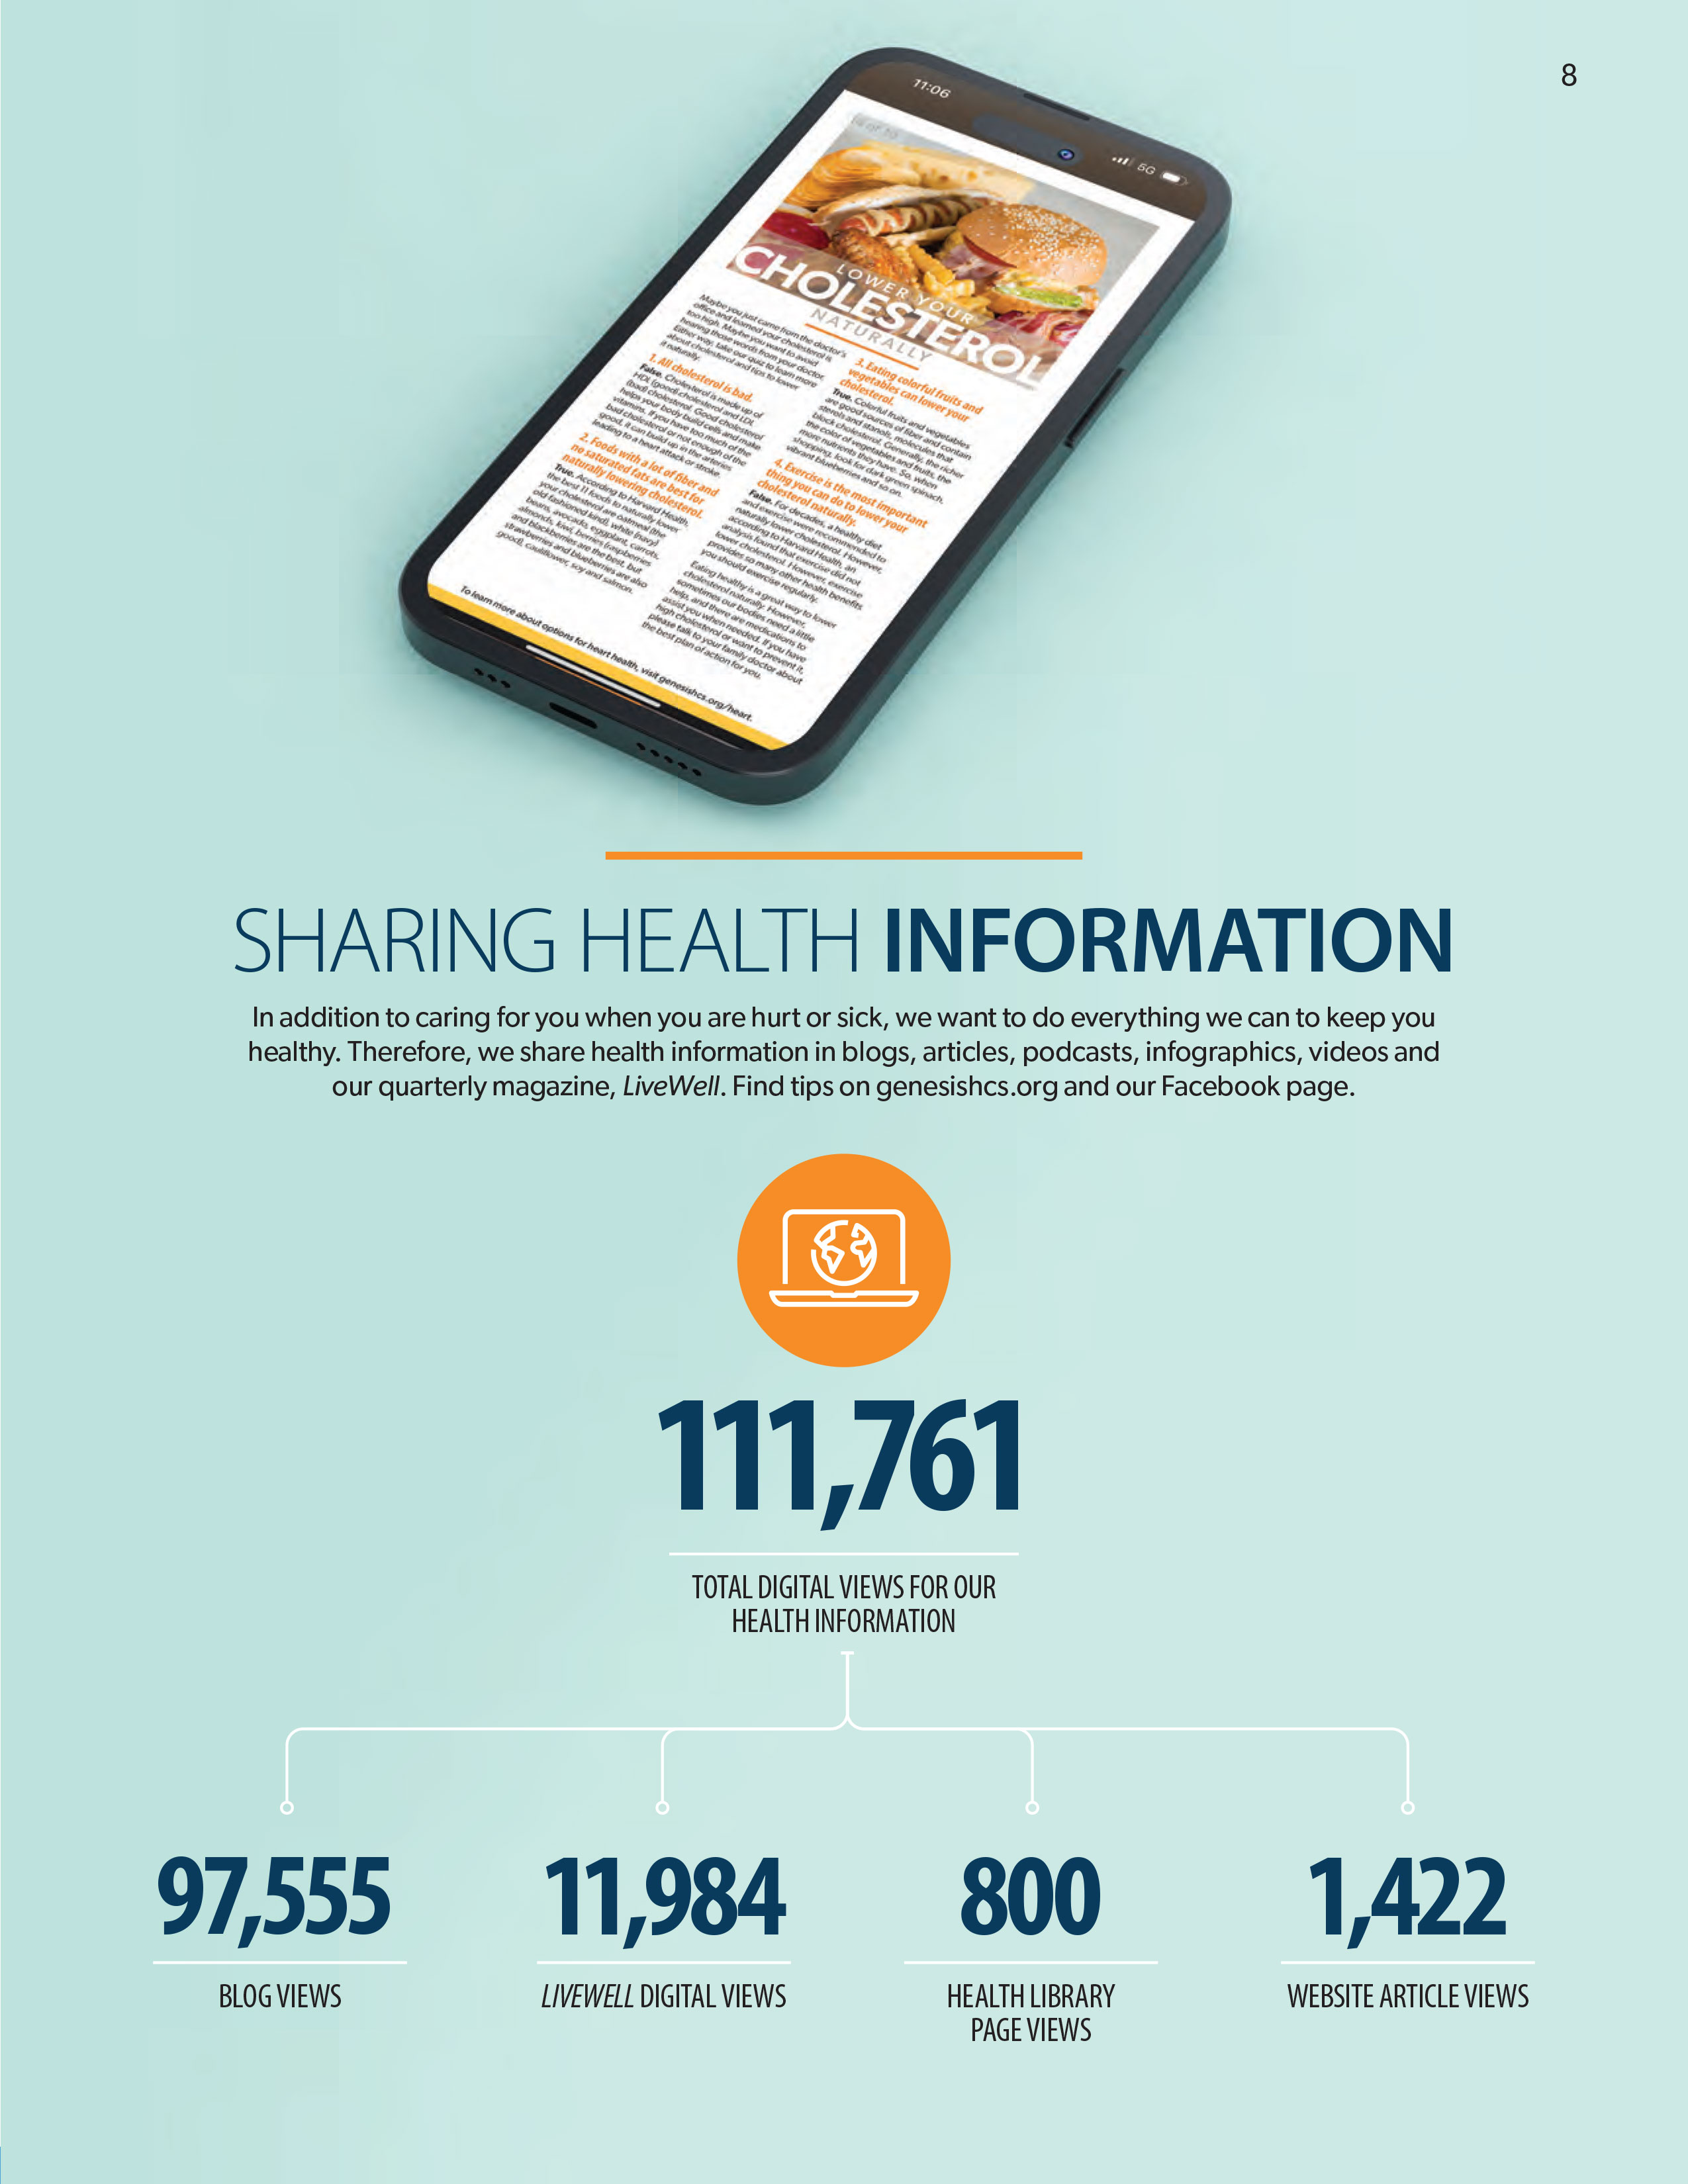 Sharing health information